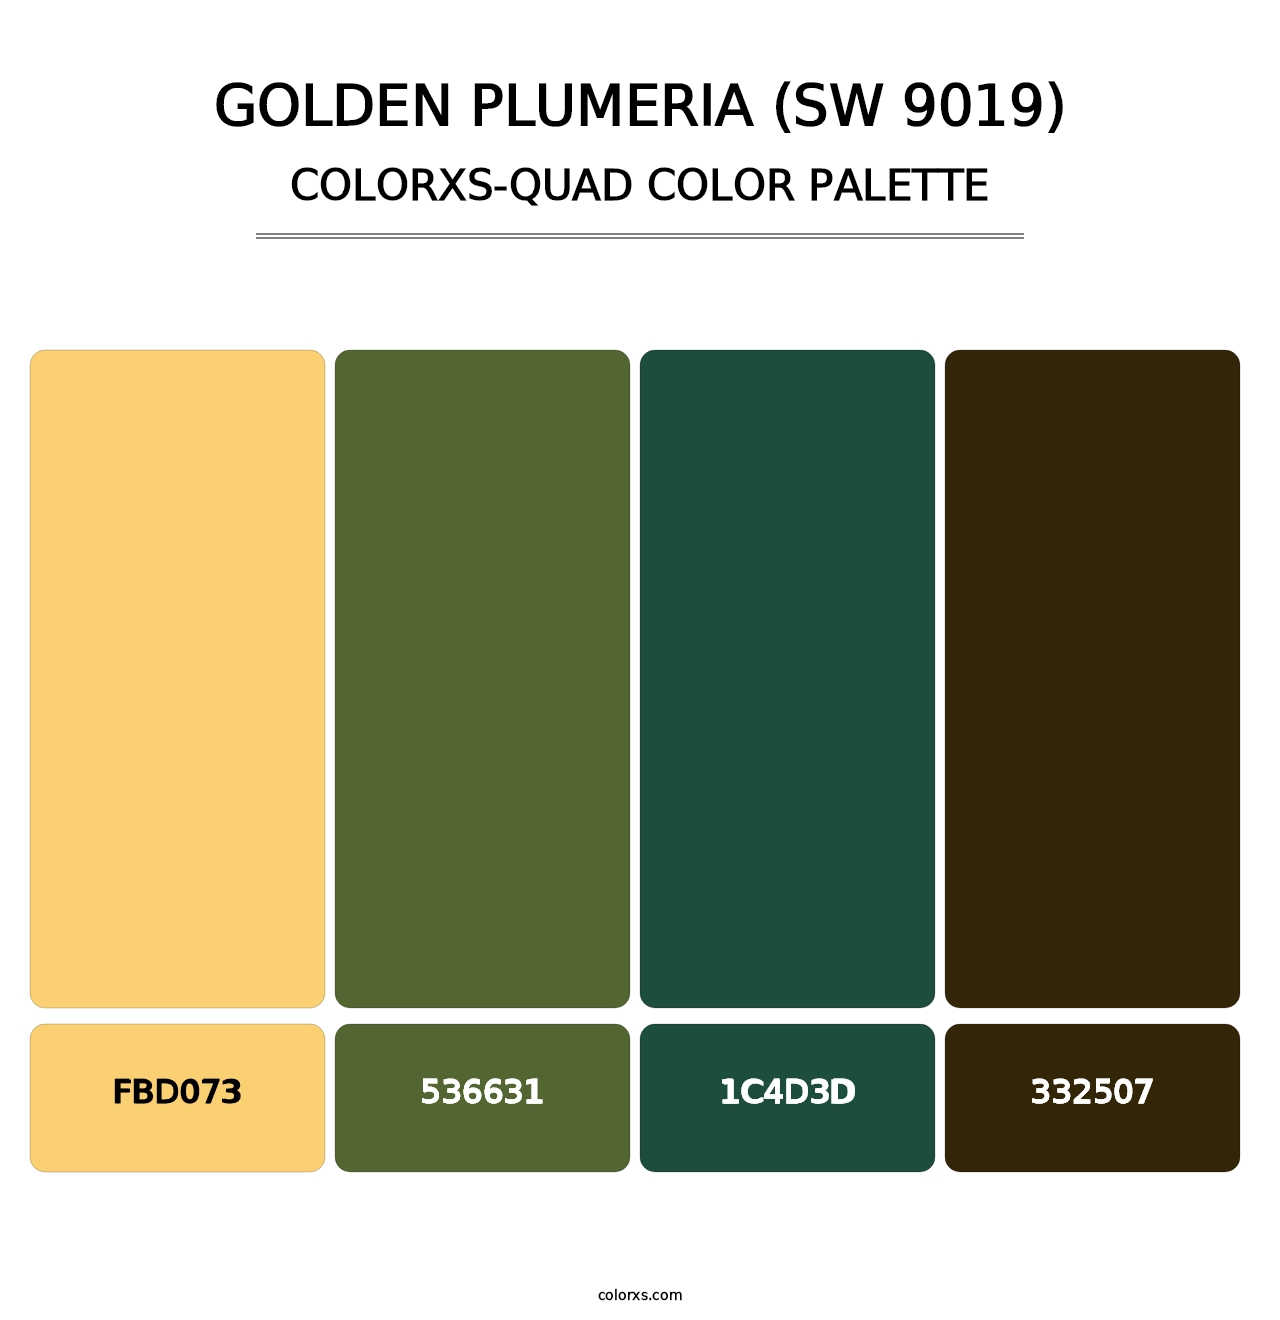 Golden Plumeria (SW 9019) - Colorxs Quad Palette